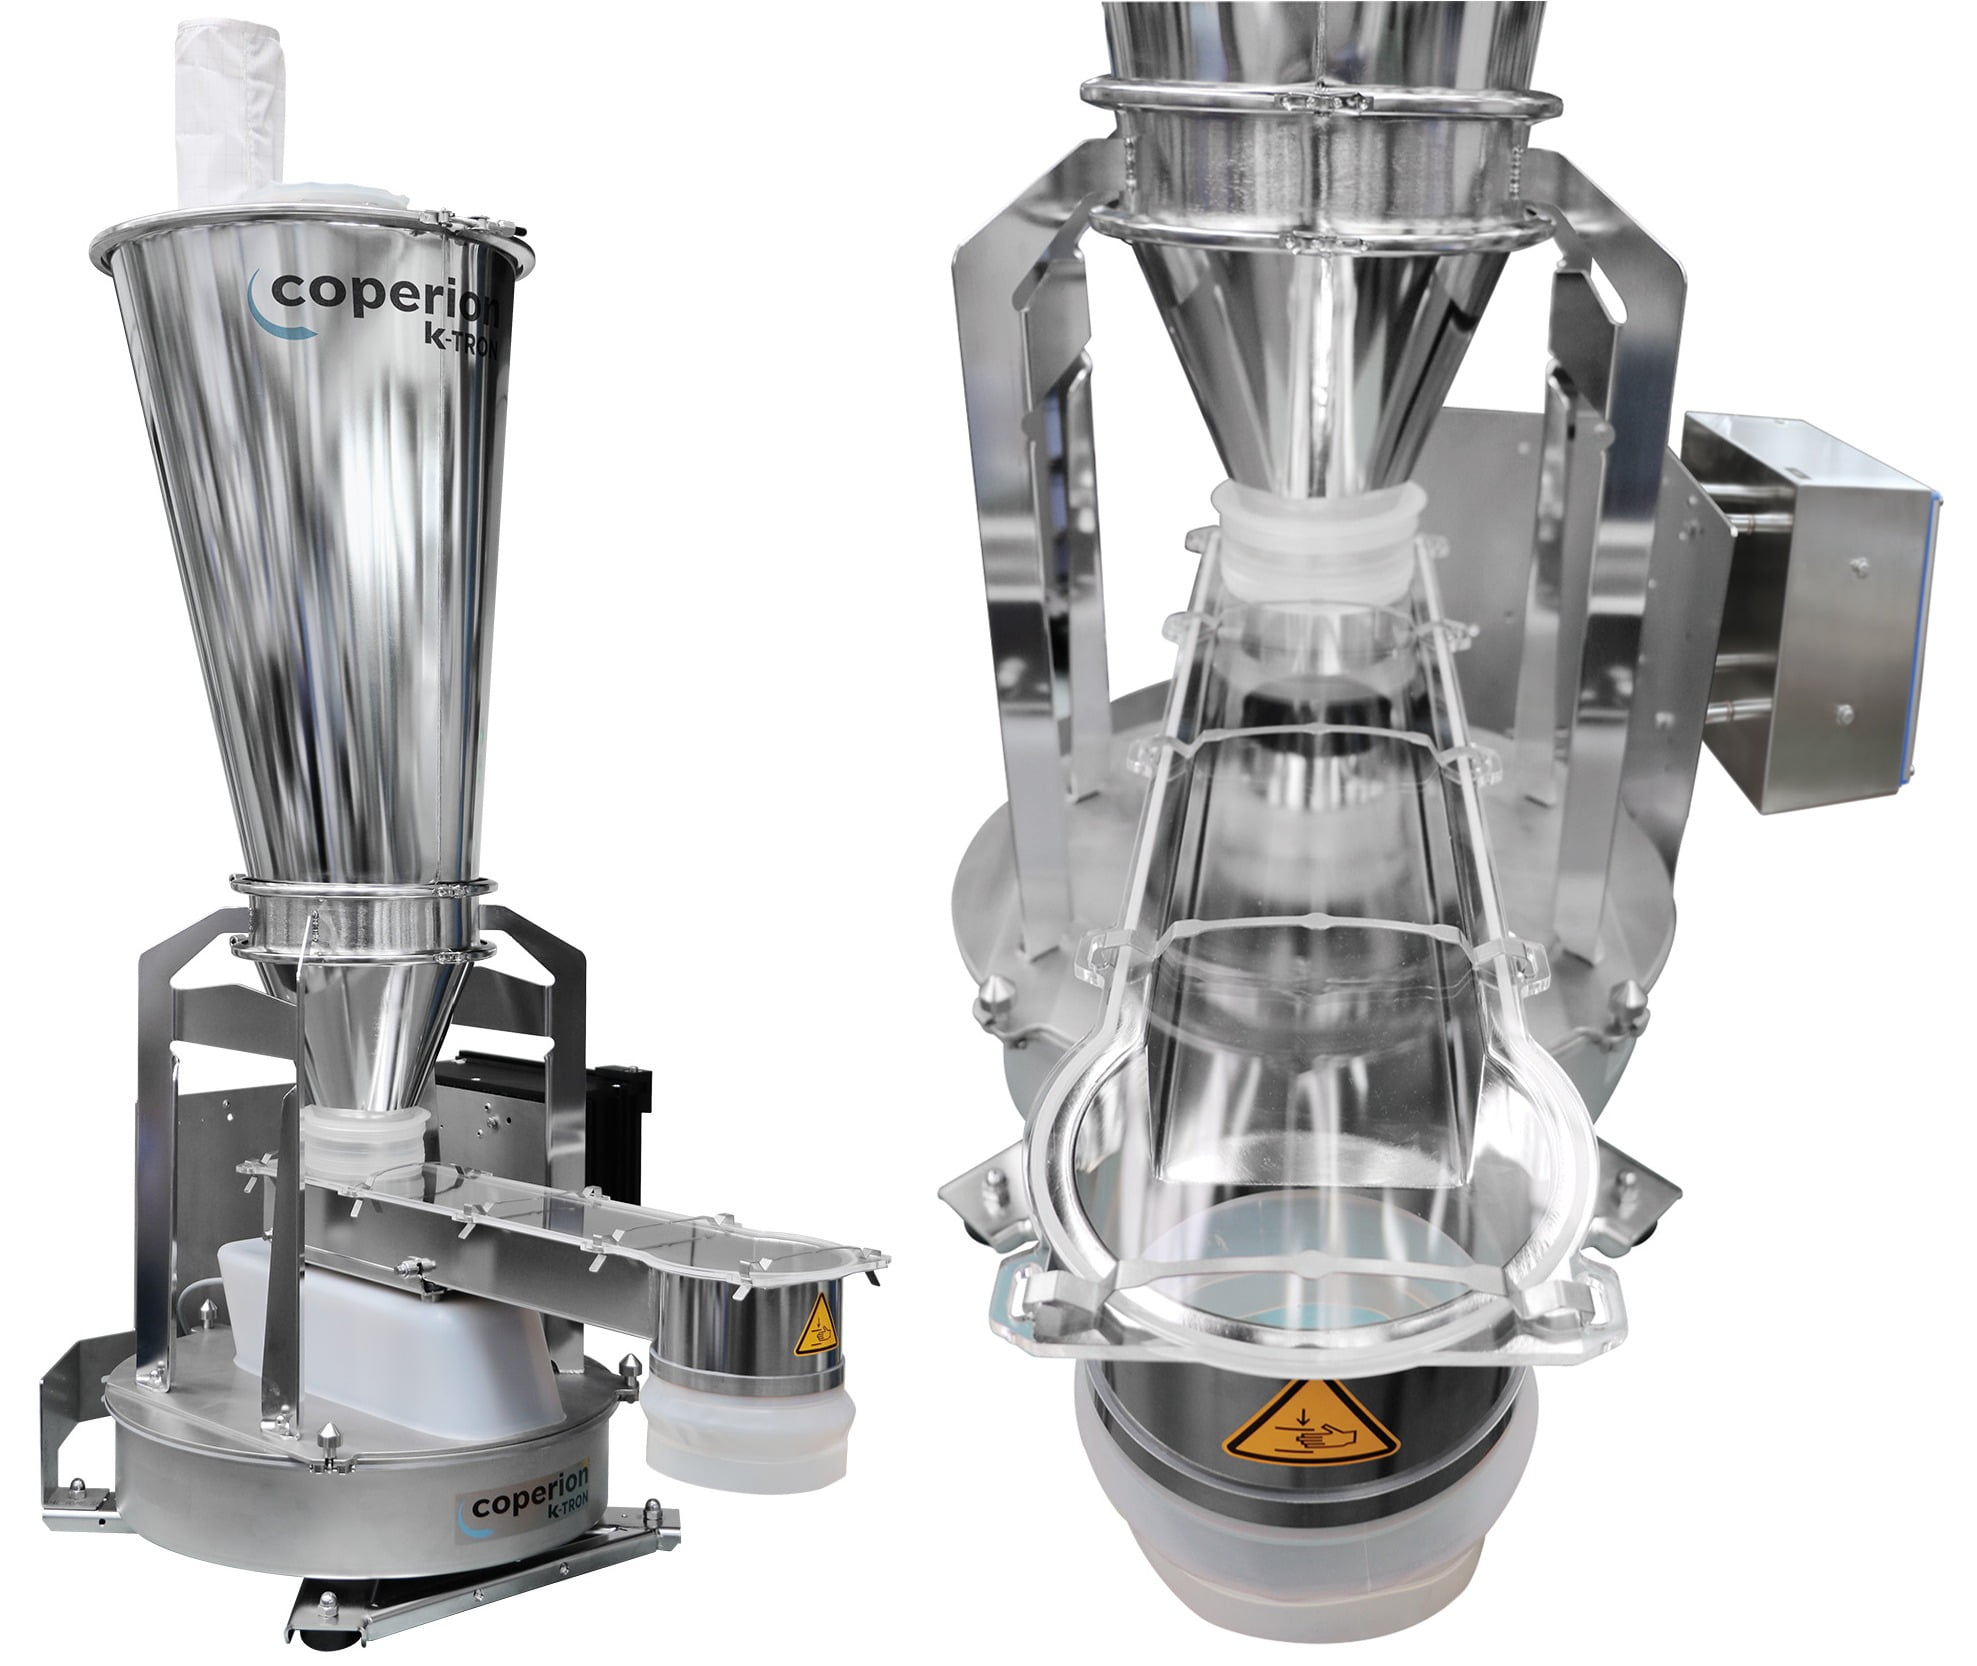 Coperion-K-Tron-appliance-Product-Mixer